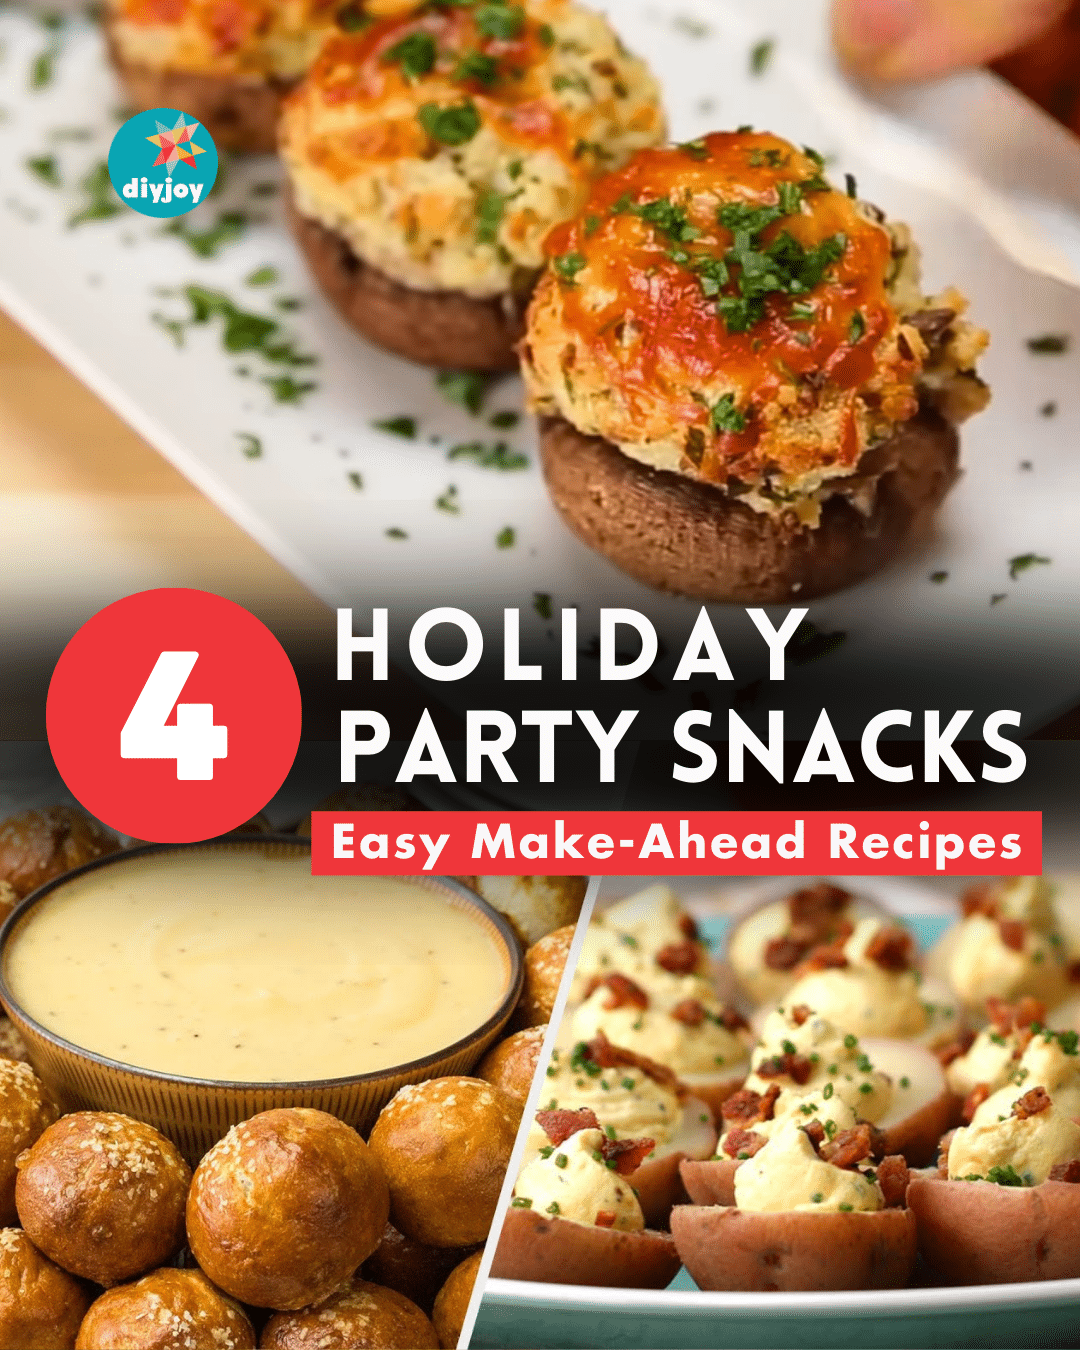 4 Make-Ahead Holiday Party Snacks